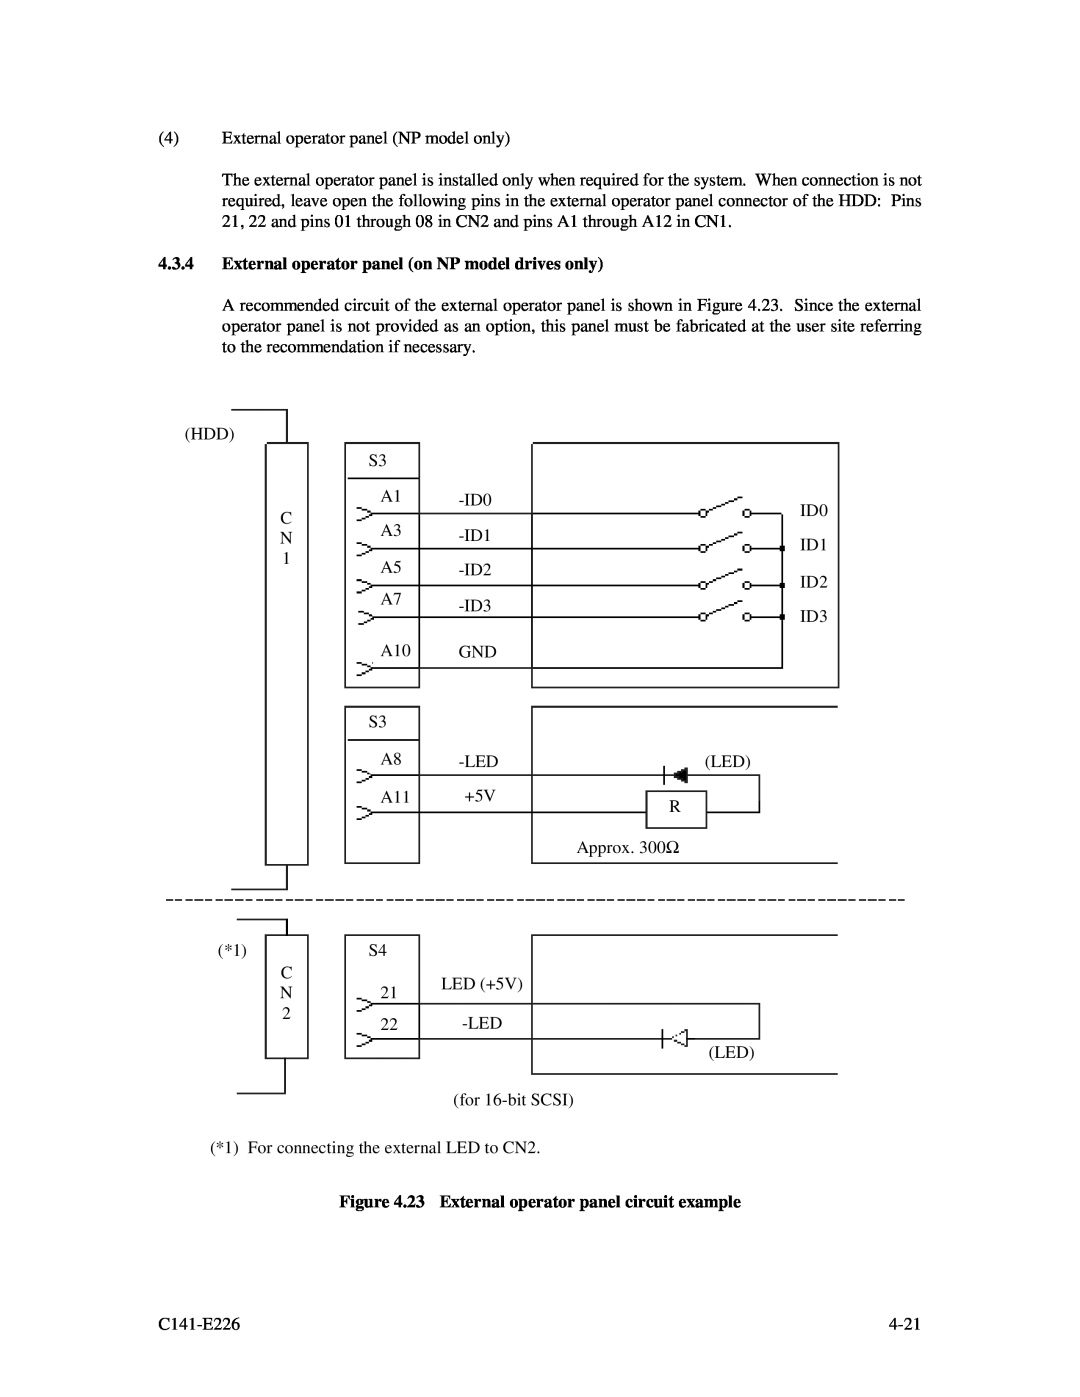 Fujitsu MAW3147NC/NP manual External operator panel on NP model drives only, 23 External operator panel circuit example 